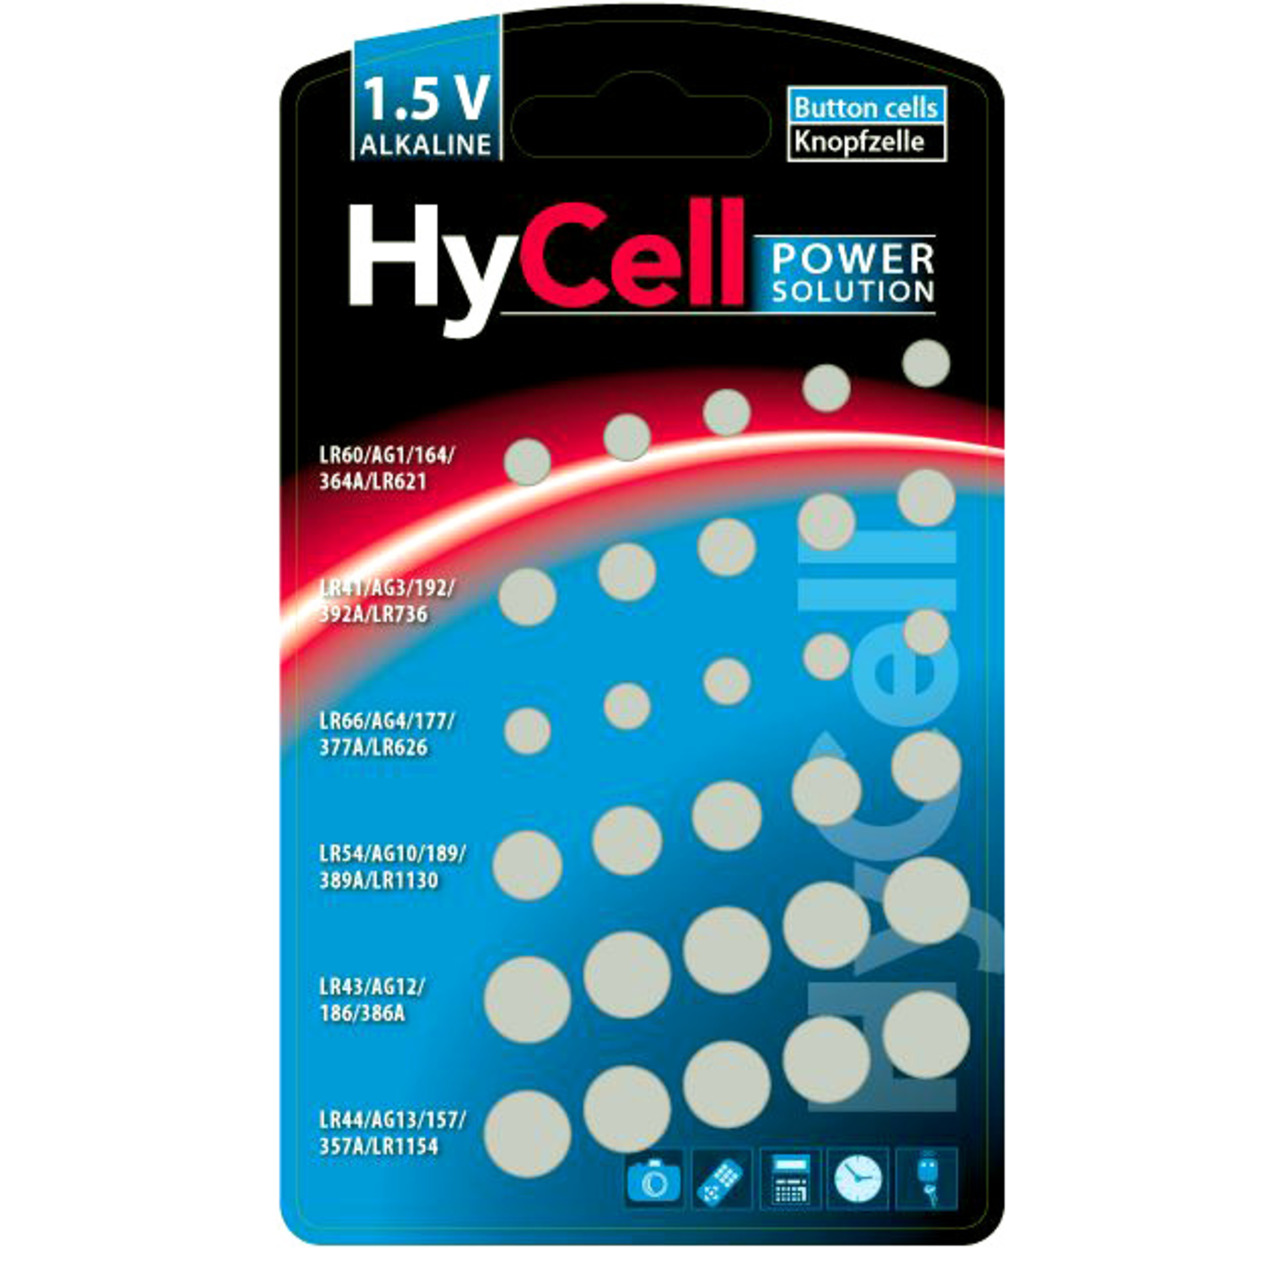 Hycell Alkaline-Knopfzellen-Set- 1-5 V- 30 Stück